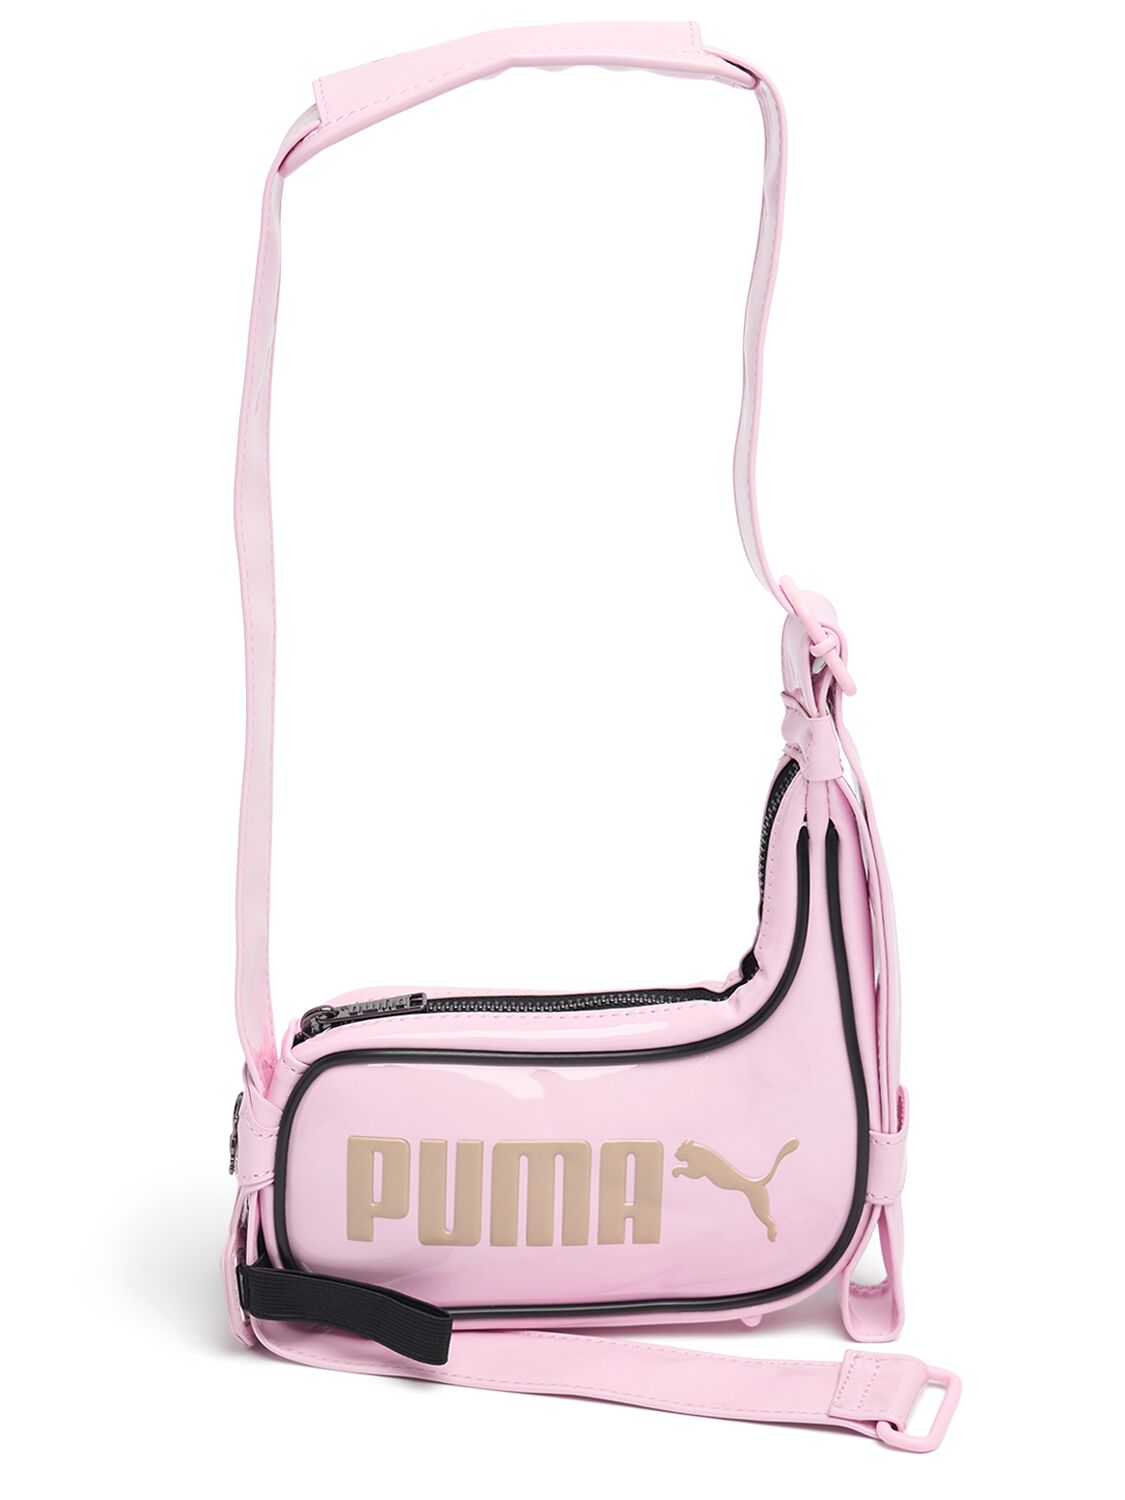 Ottolinger Puma X  Small Shoulder Bag In Pink